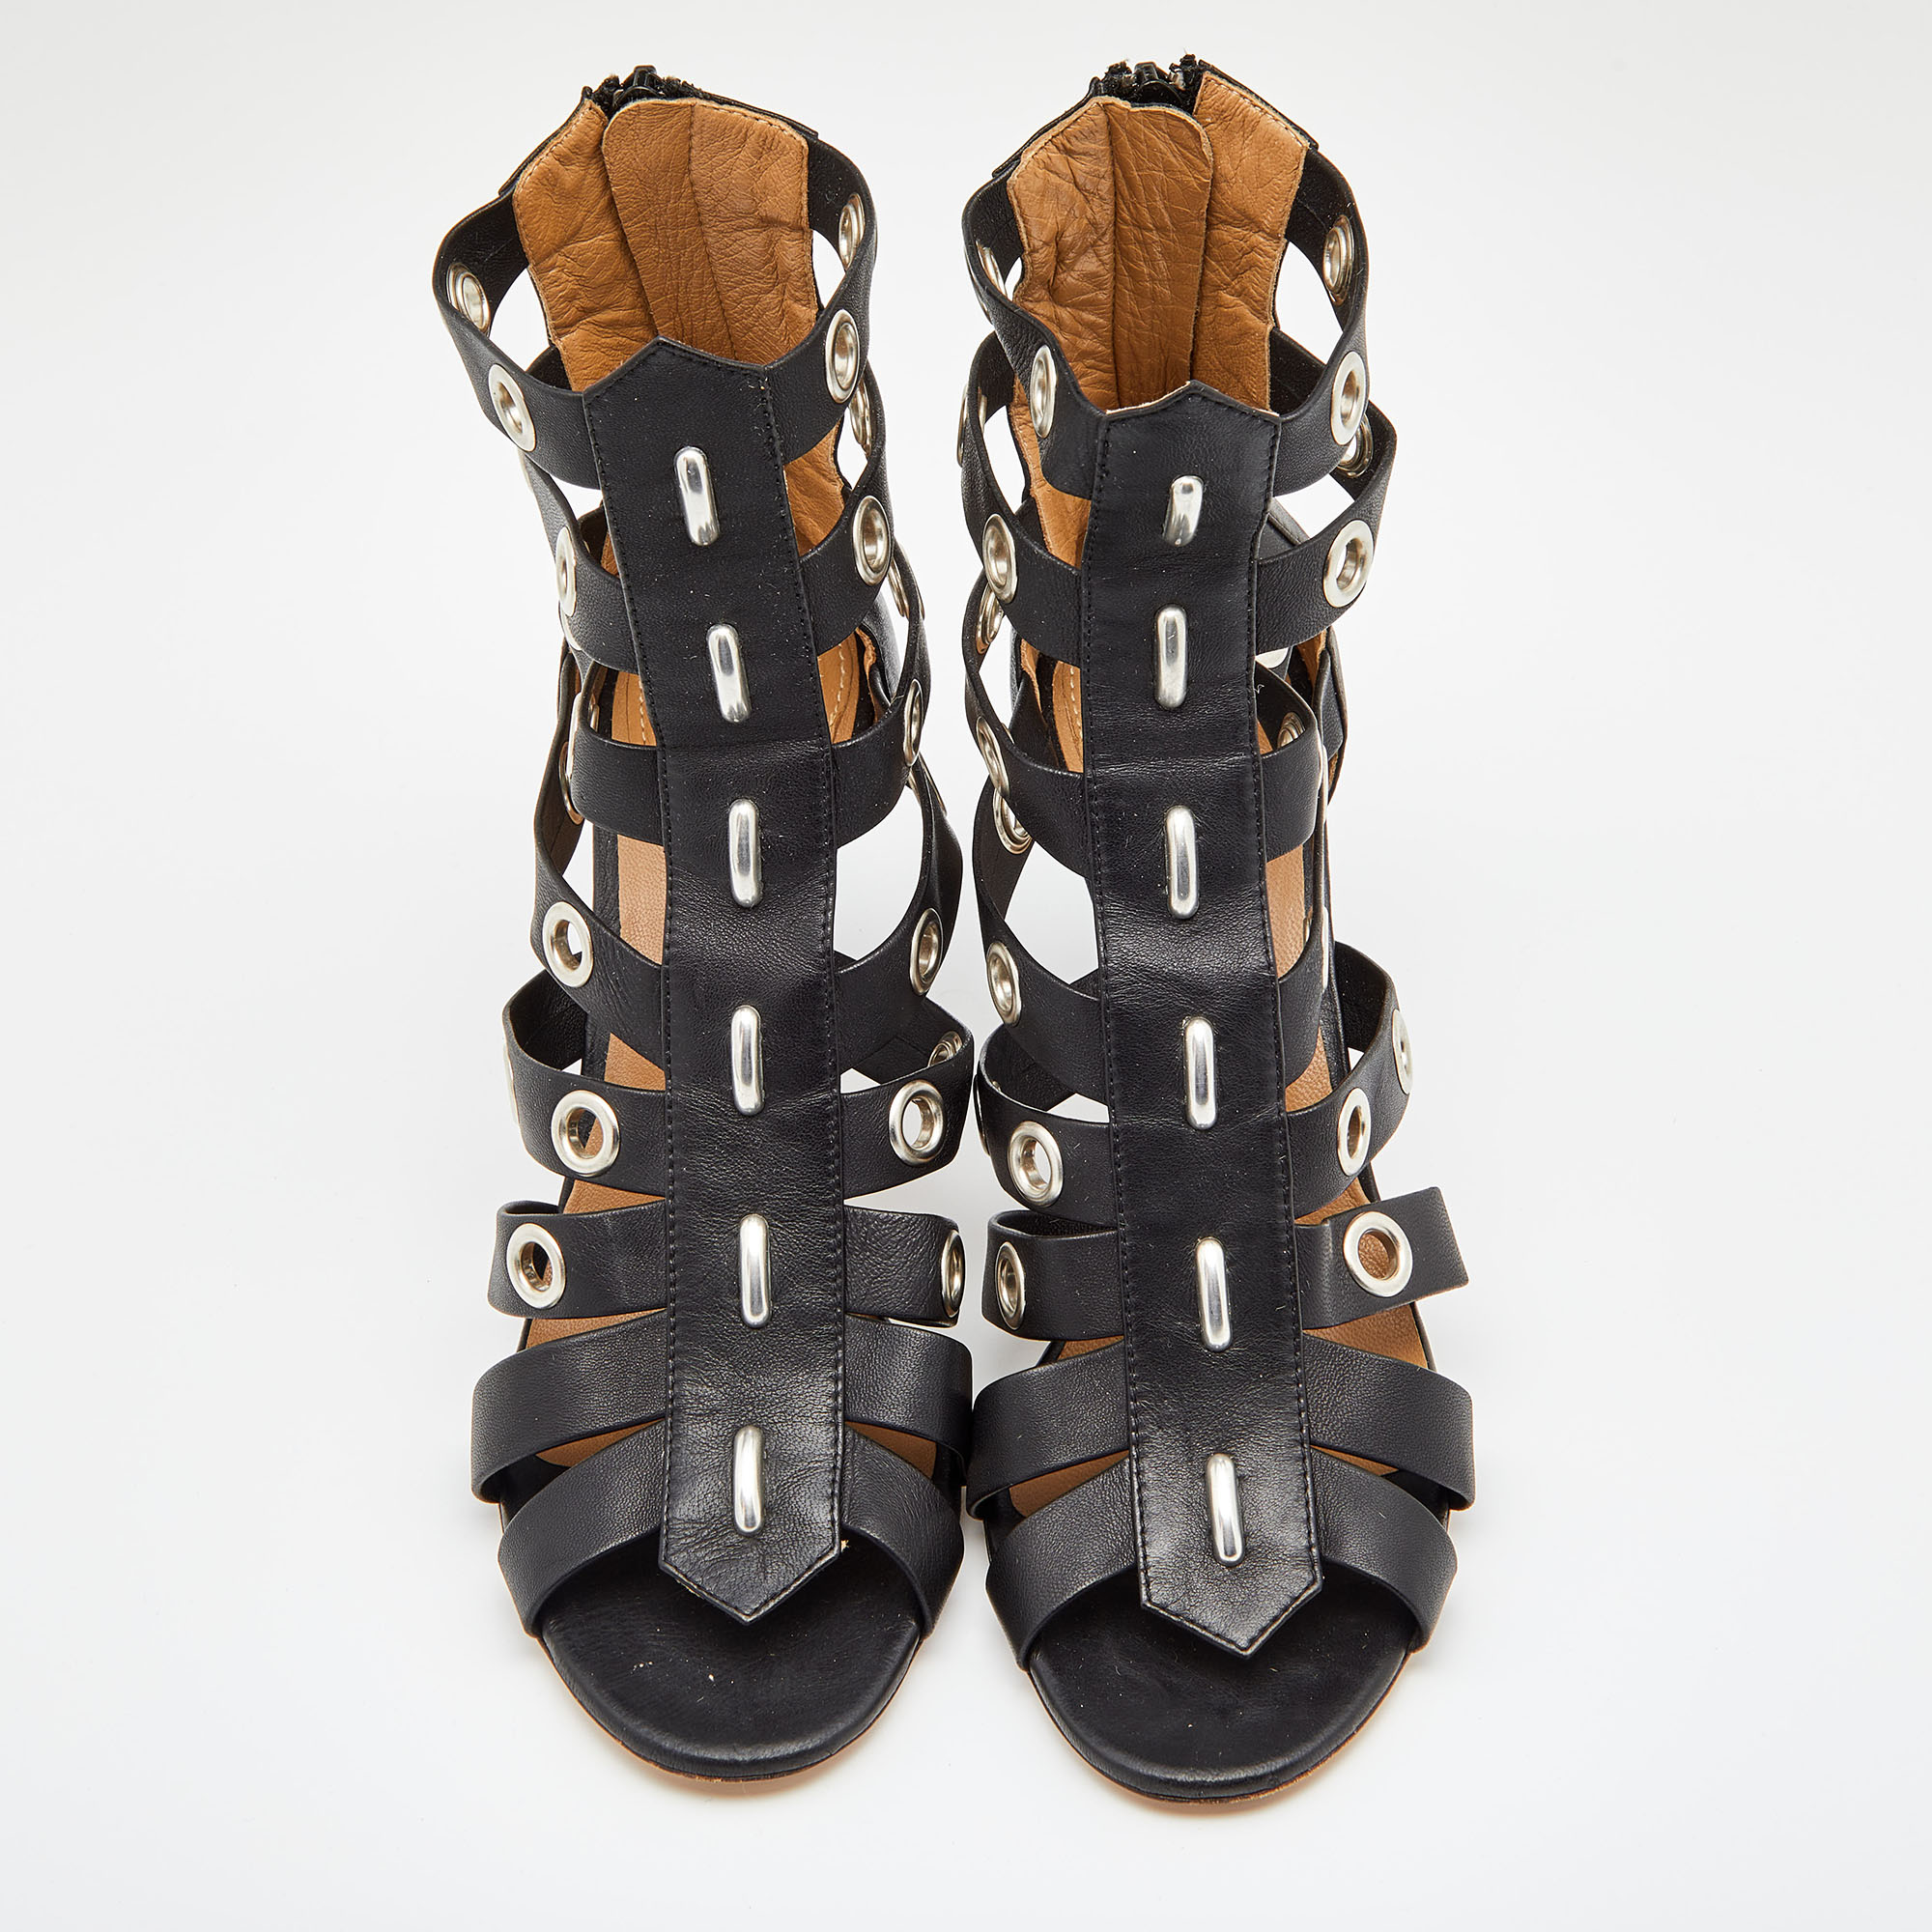 Chloe Black Leather Grommet Cage Sandals Size 38.5